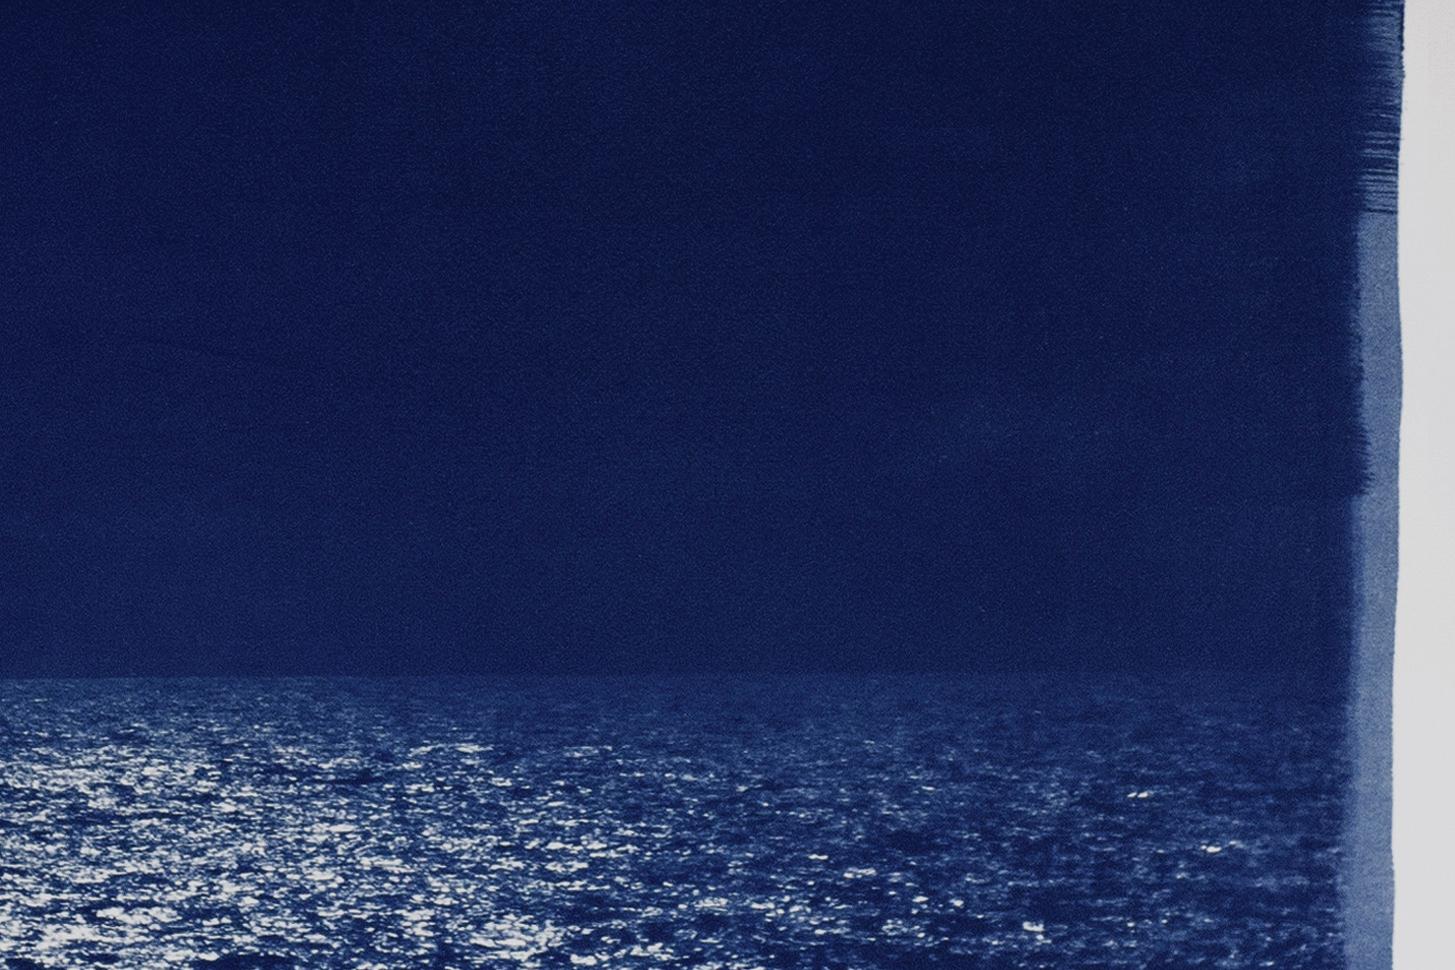 Barcelona Beach Night Horizon, Nocturnal Seascape Cyanotype on Watercolor Paper - Minimalist Photograph by Kind of Cyan